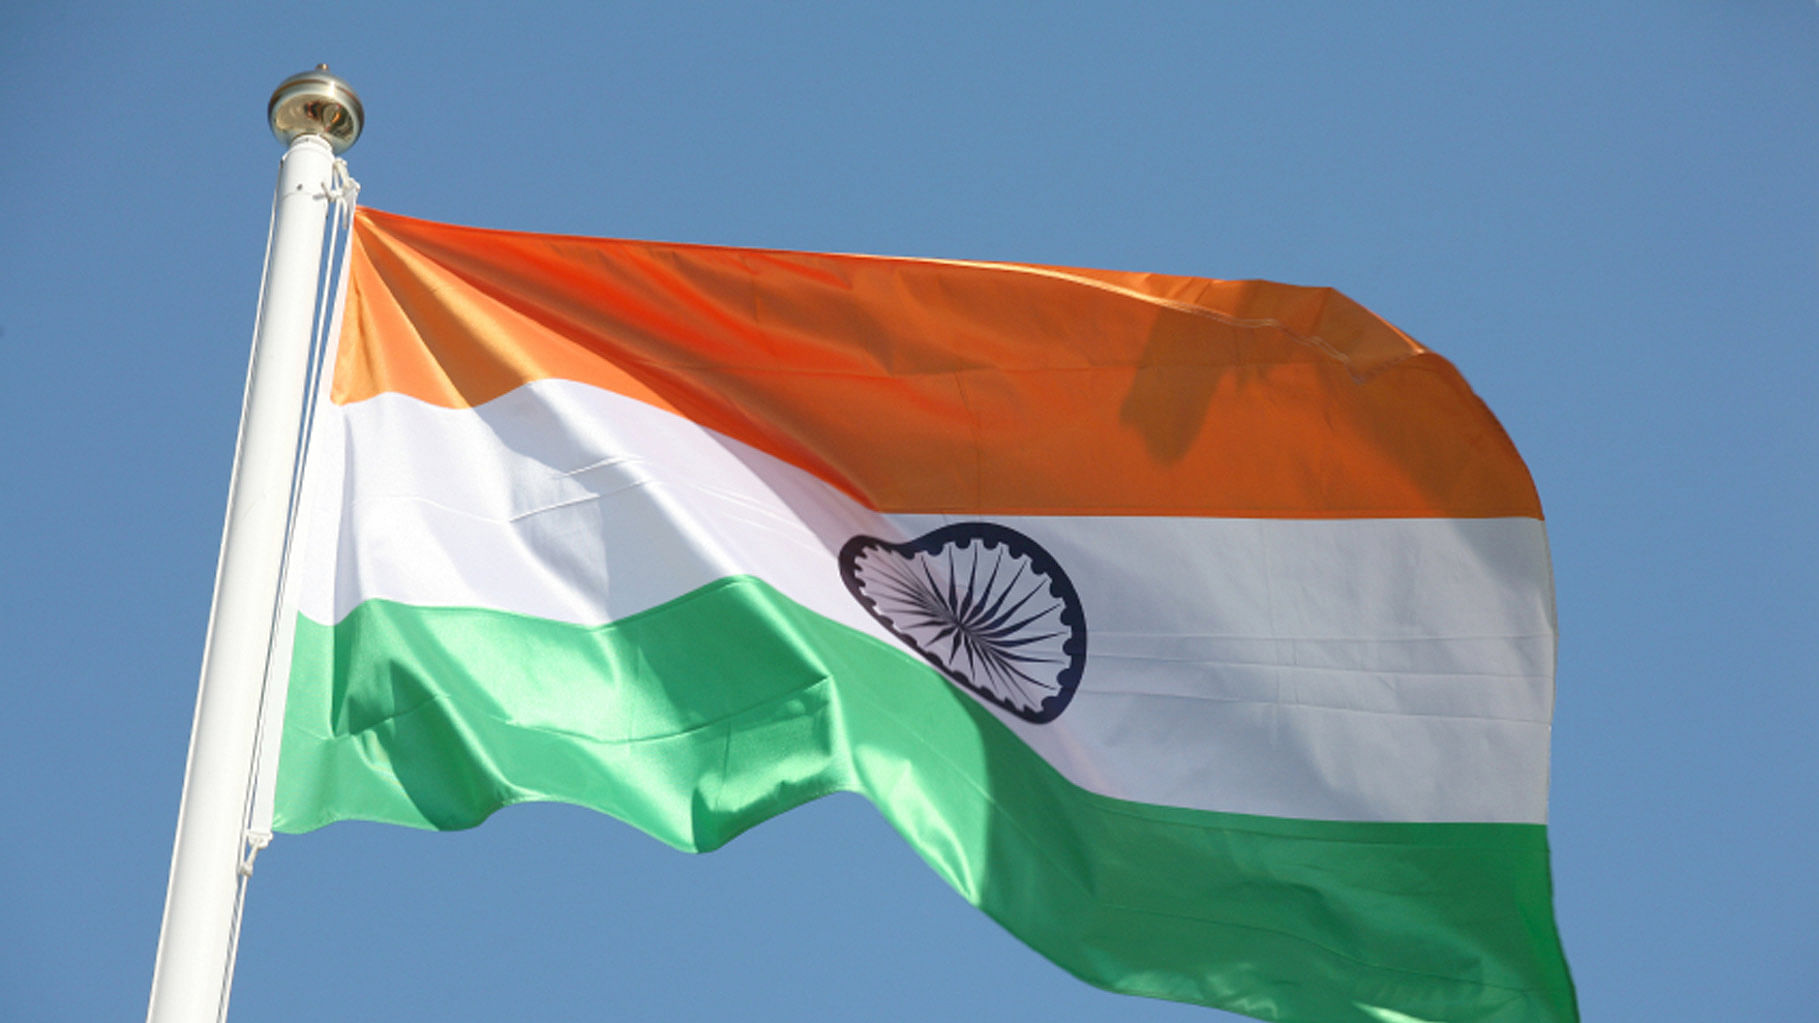 The Indian flag. (Photo: iStockPhoto)